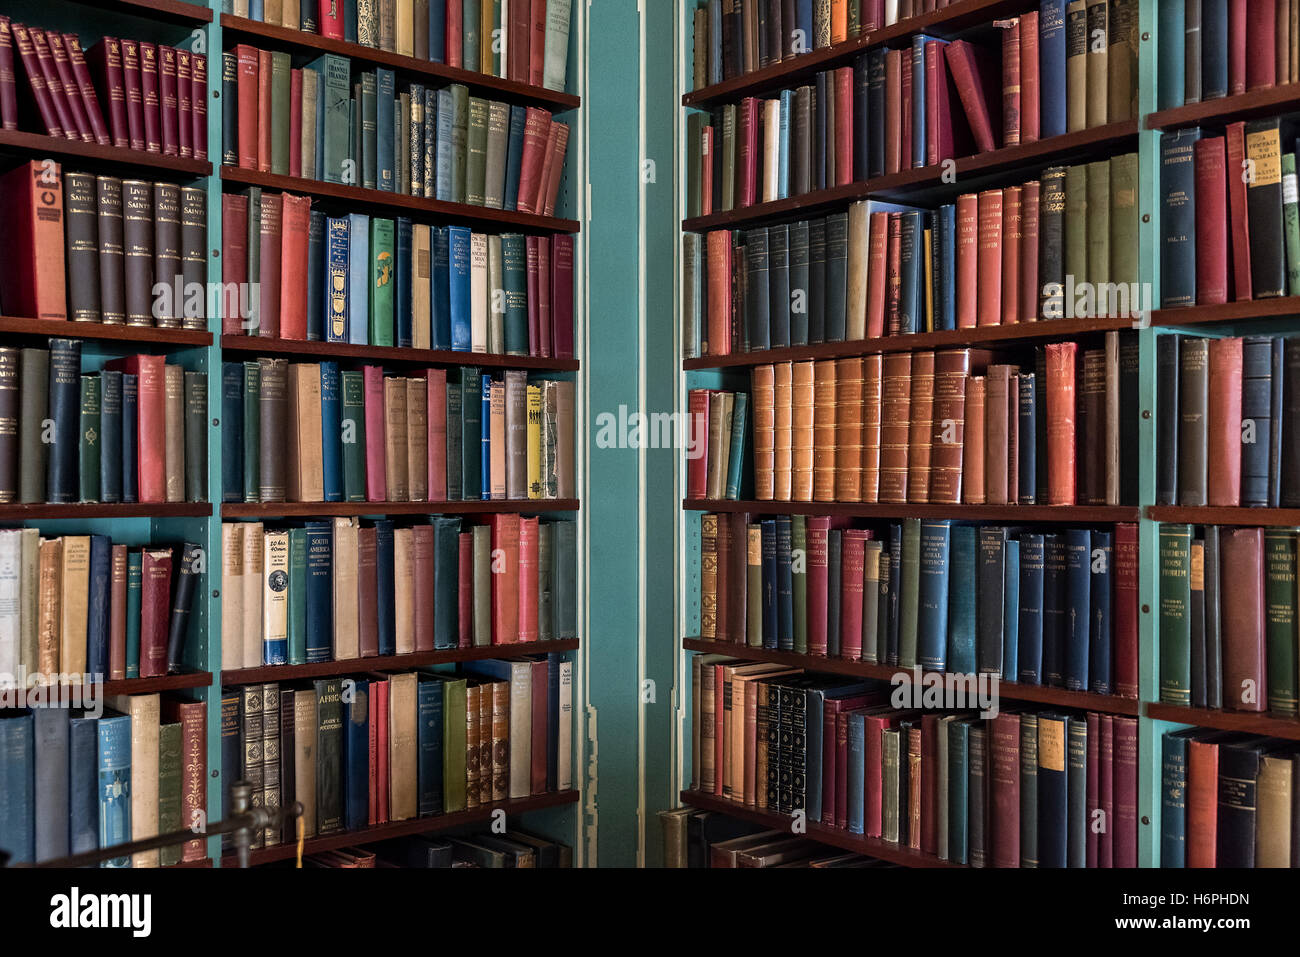 Biblioteca di libri antichi e rari. Foto Stock